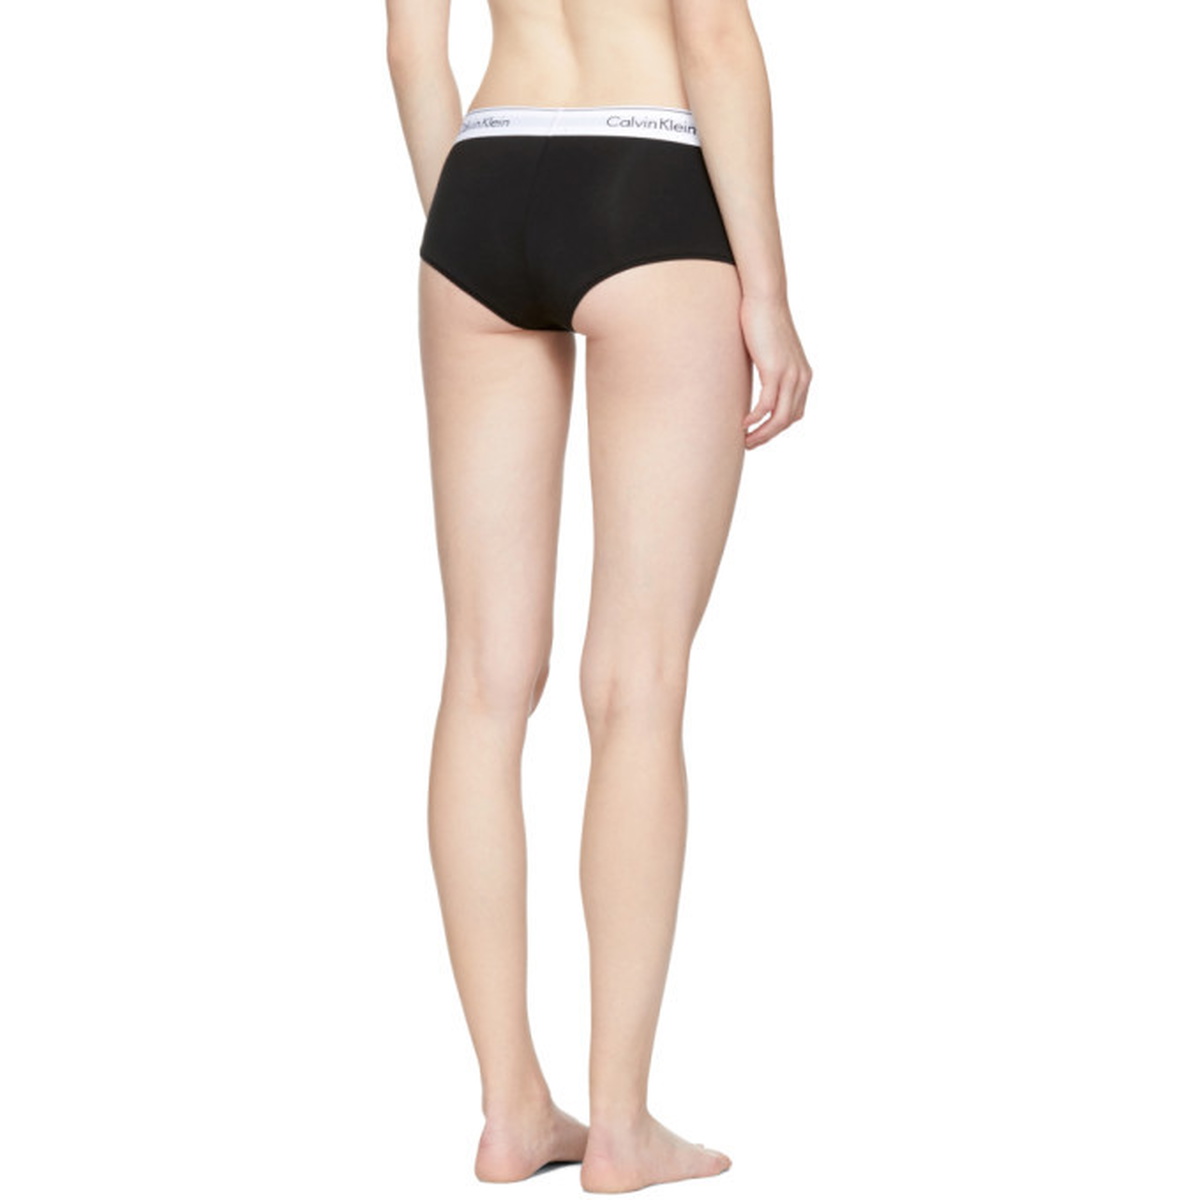 Calvin Klein Underwear Women Boy Short Black Panty - Buy Calvin